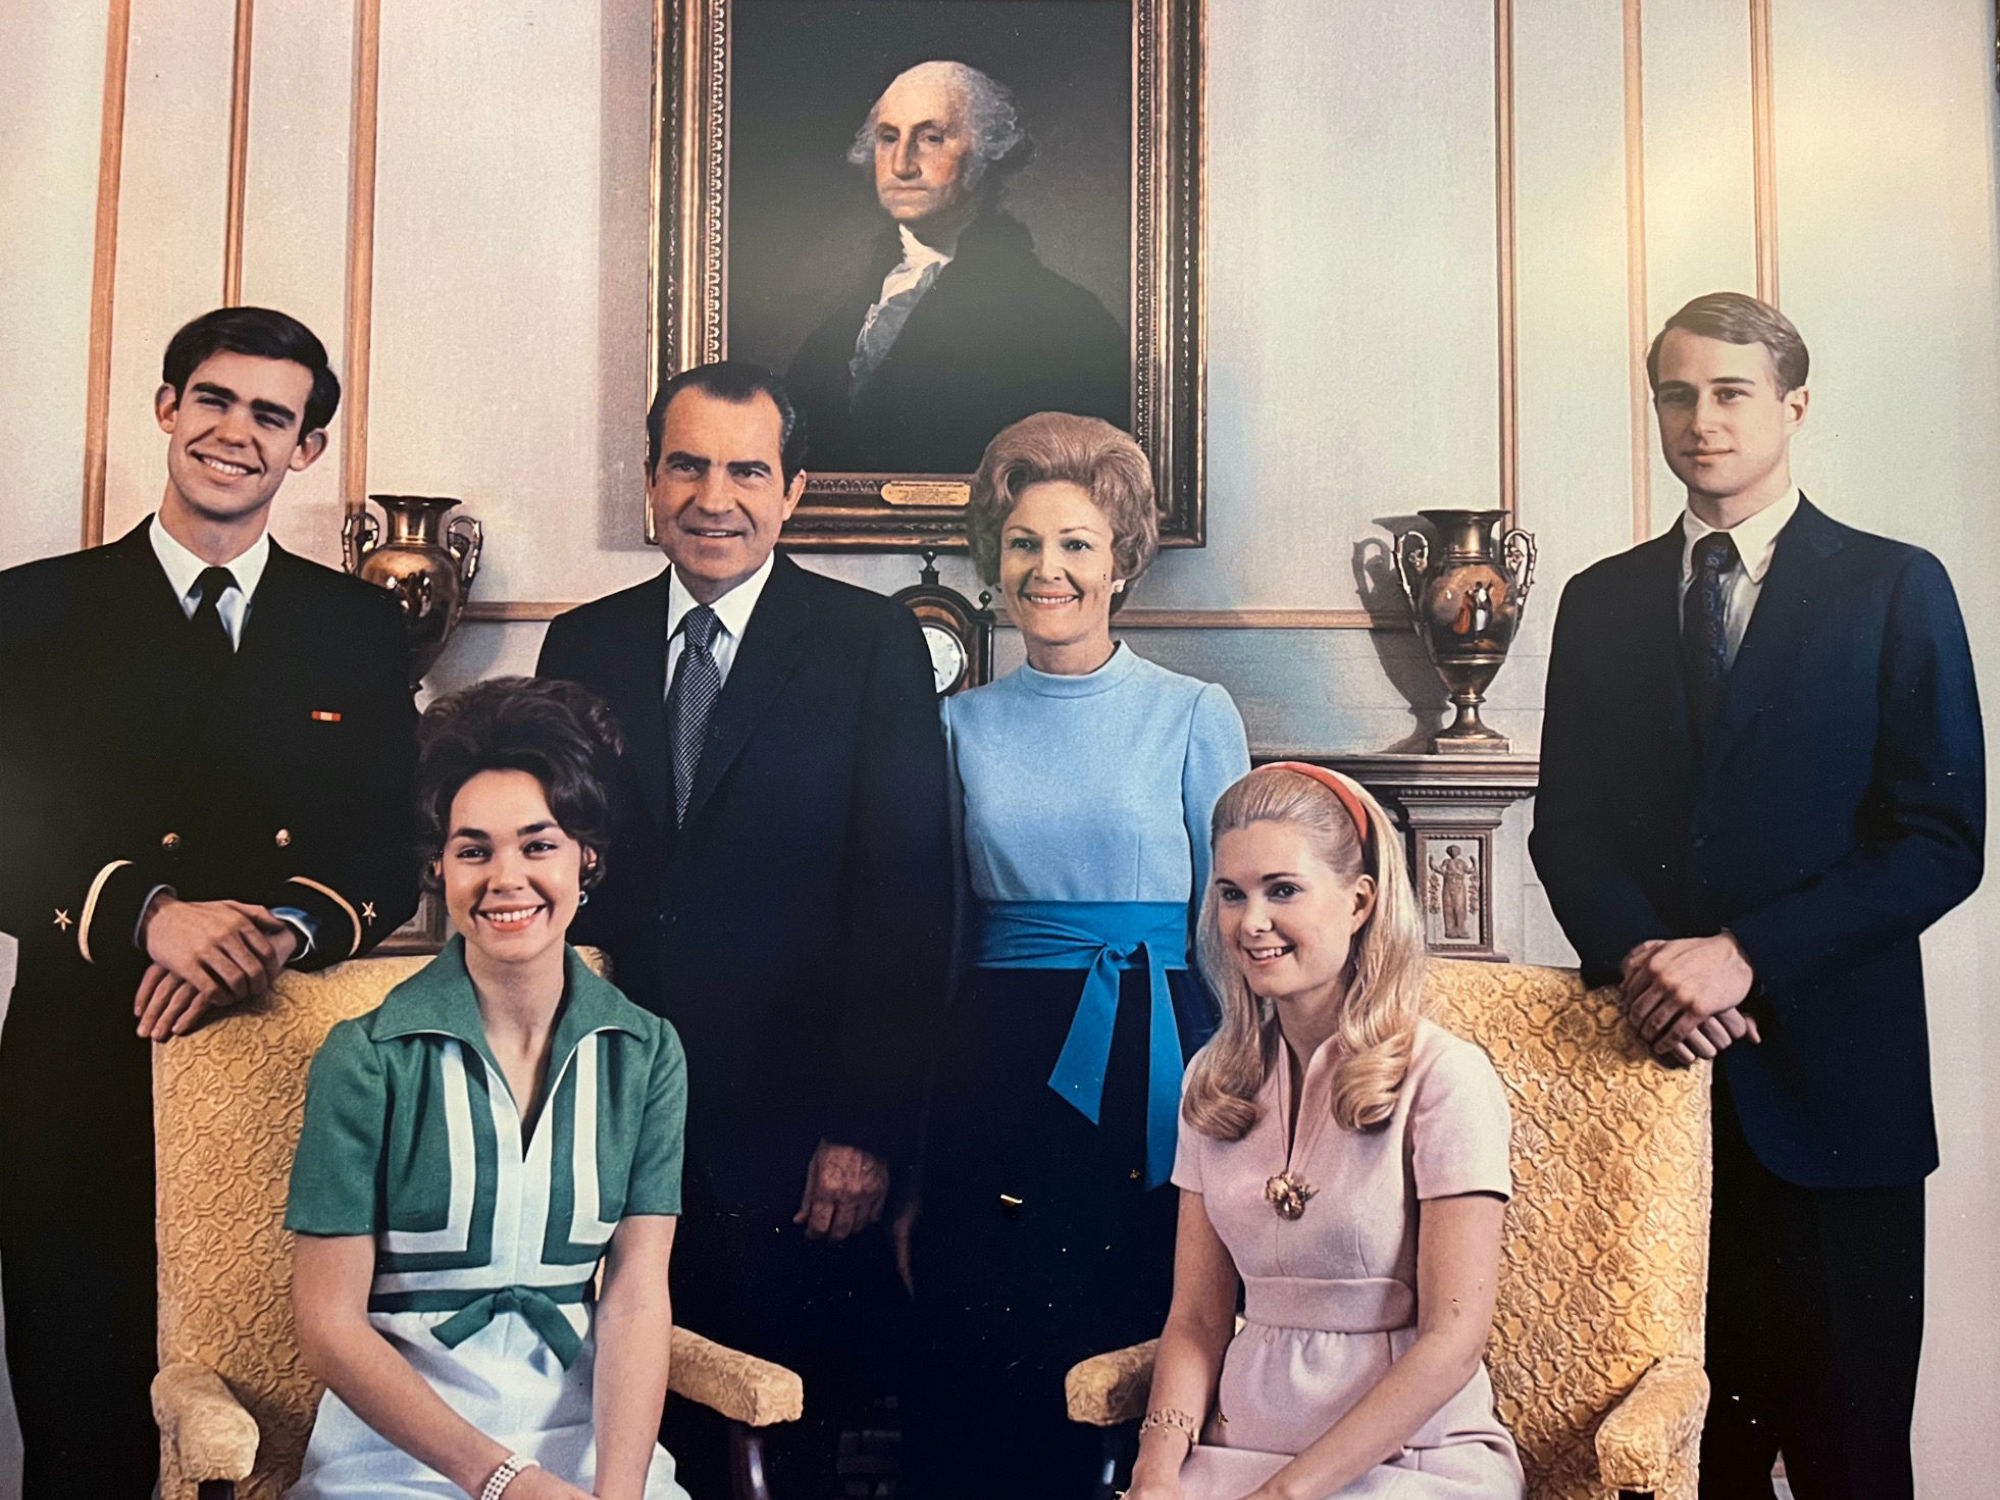 Nixon Family Portrait